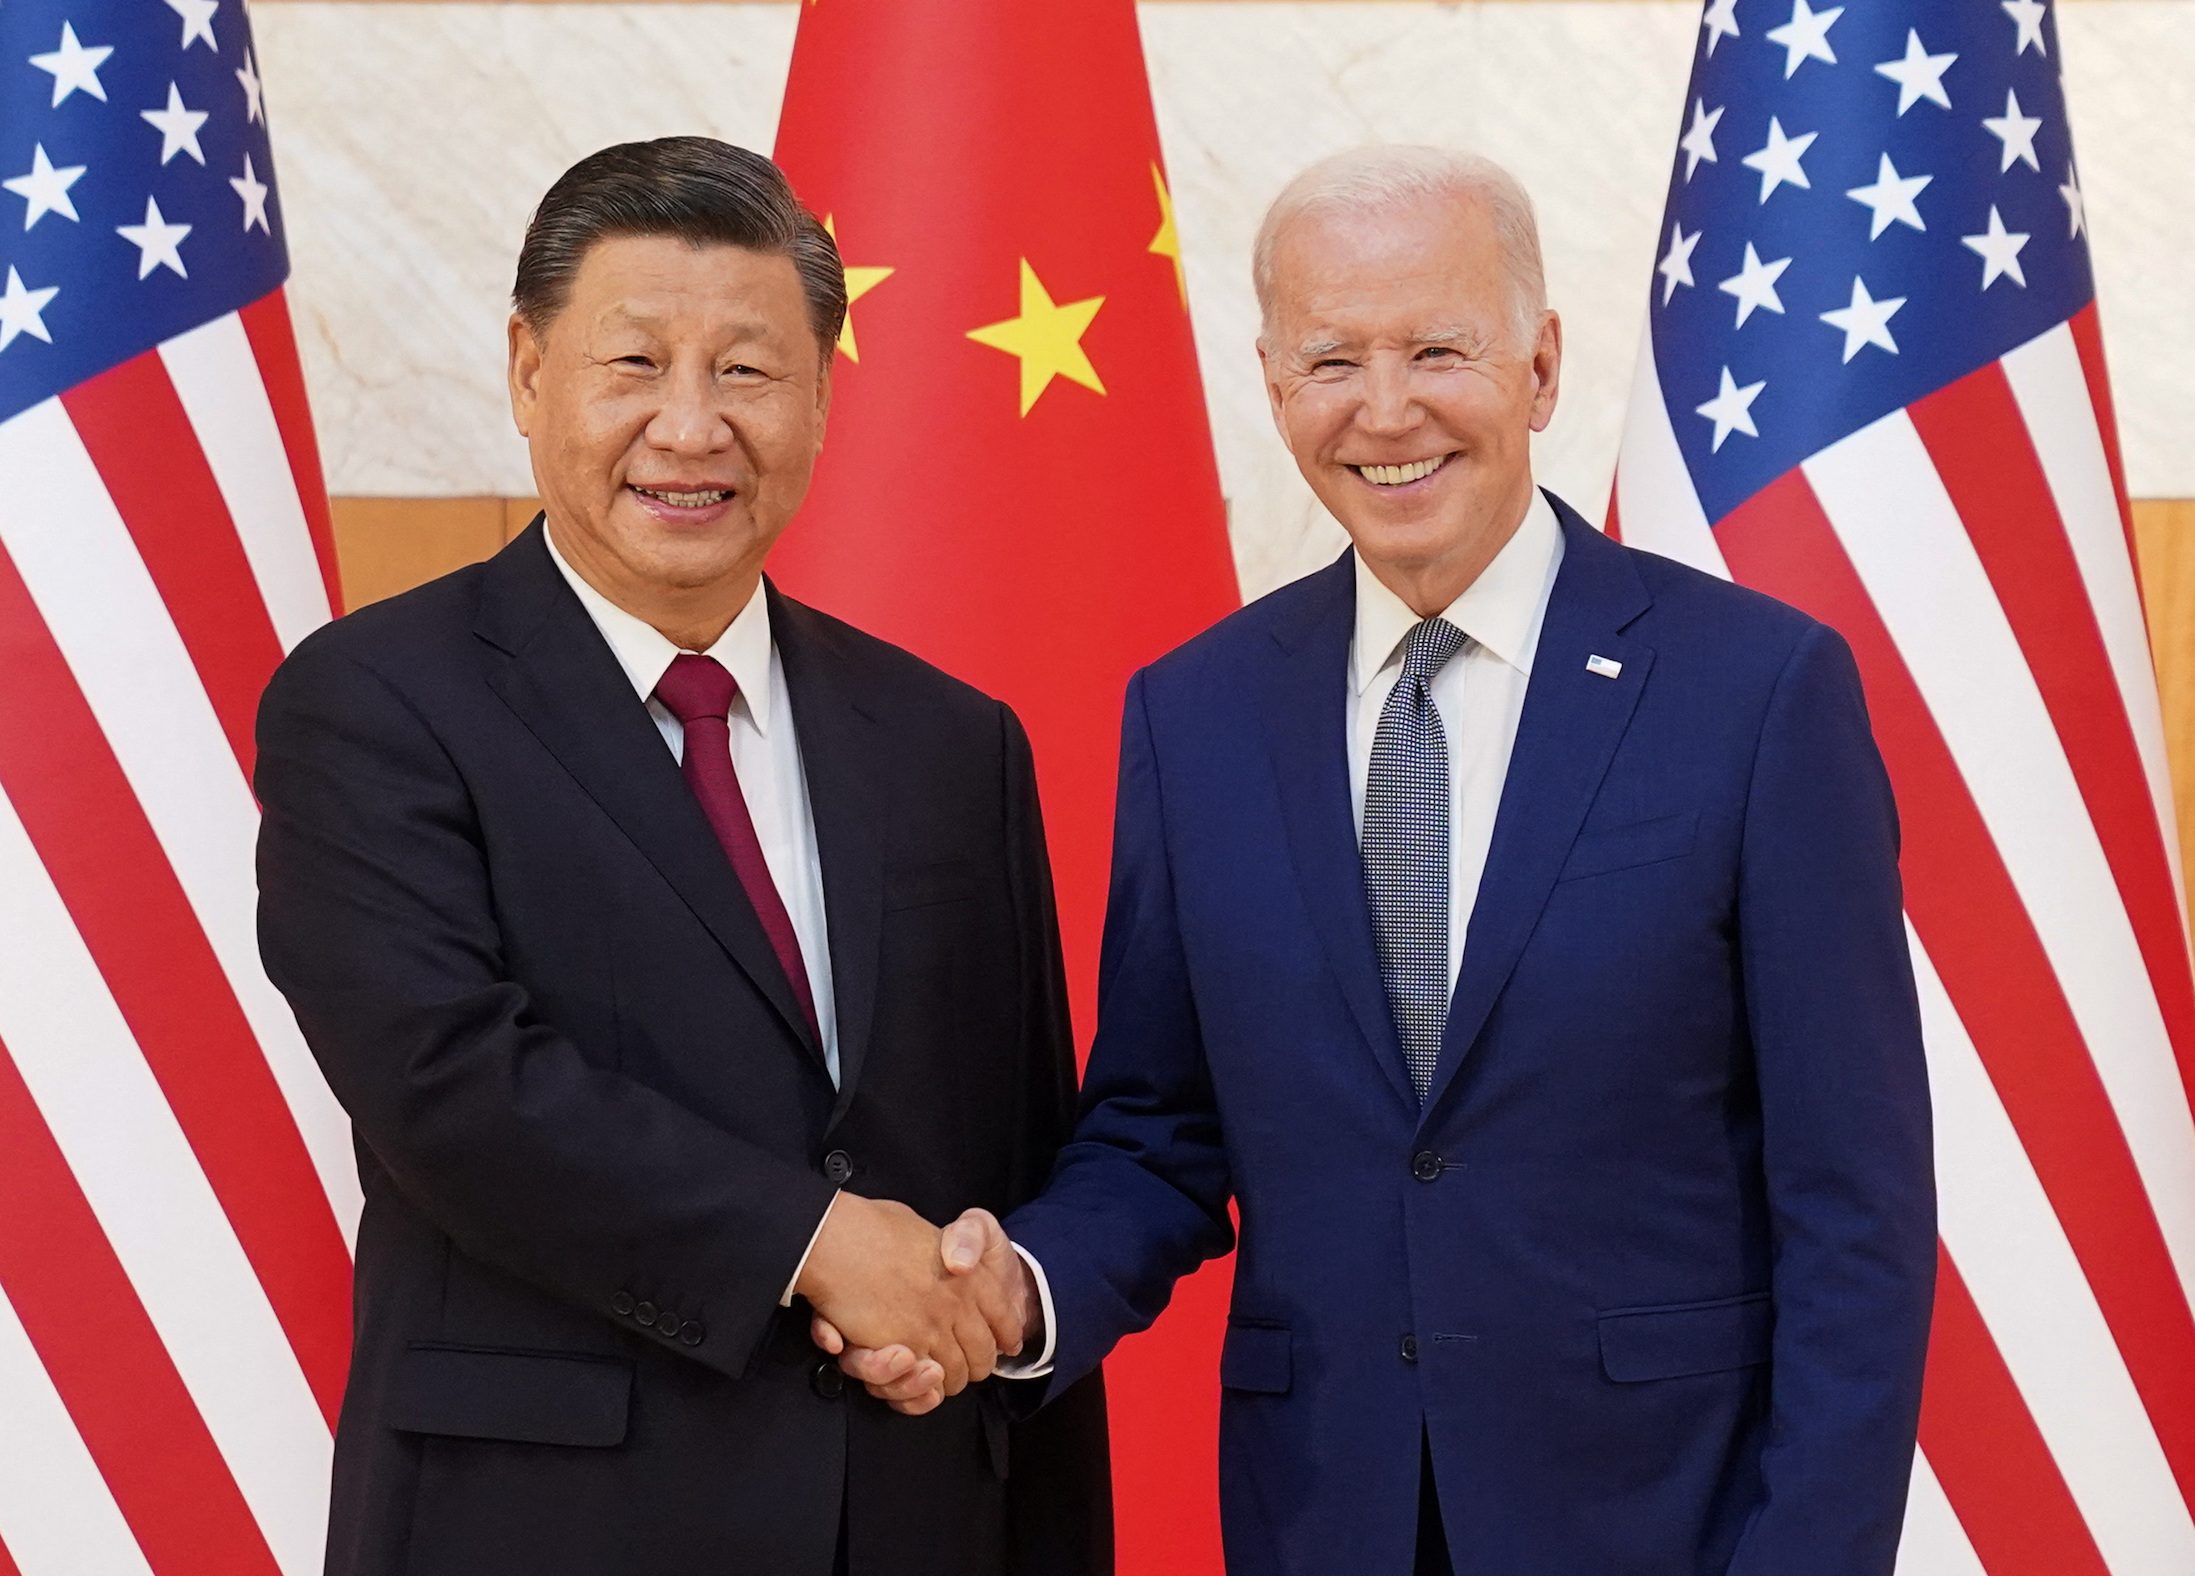 Biden warns Xi about 'coercive' Taiwan actions in 3hour meeting